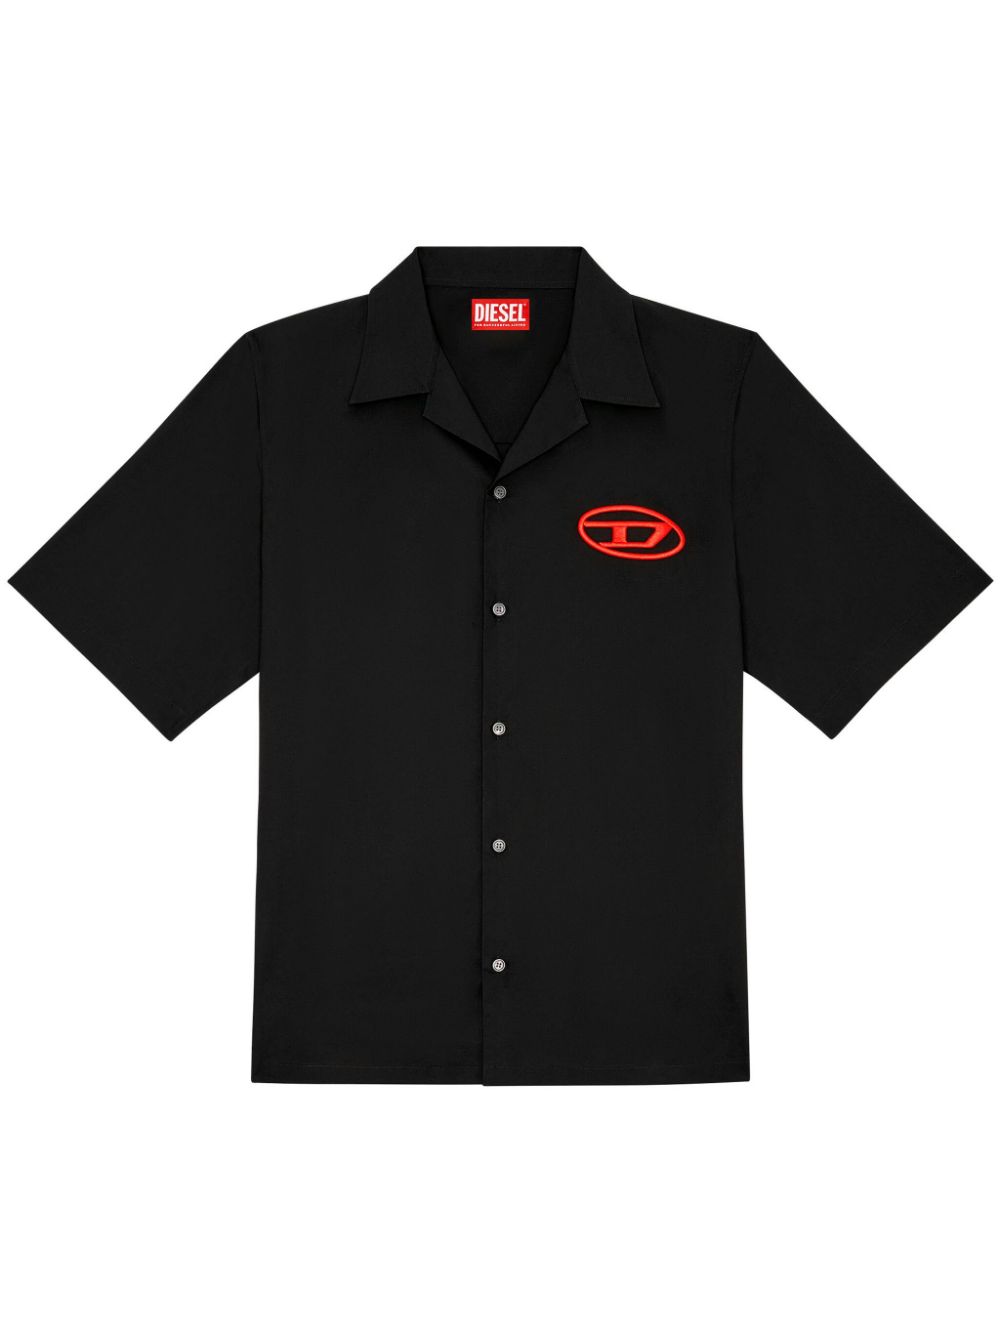 Diesel S-mac Organic Cotton Shirt In Black